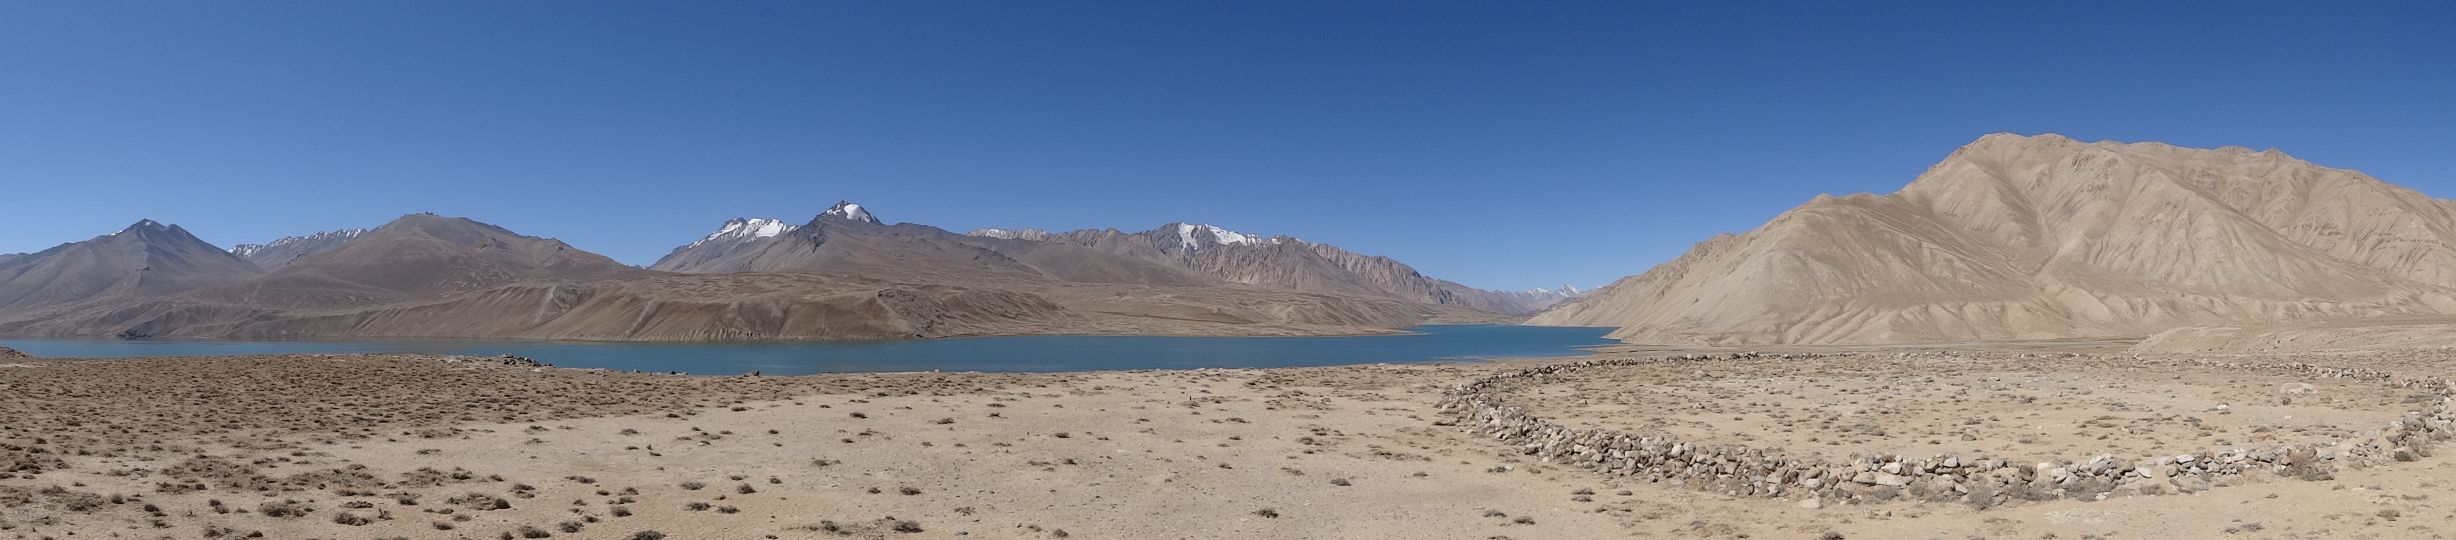 Tajikistan – Lake Yashil Kul